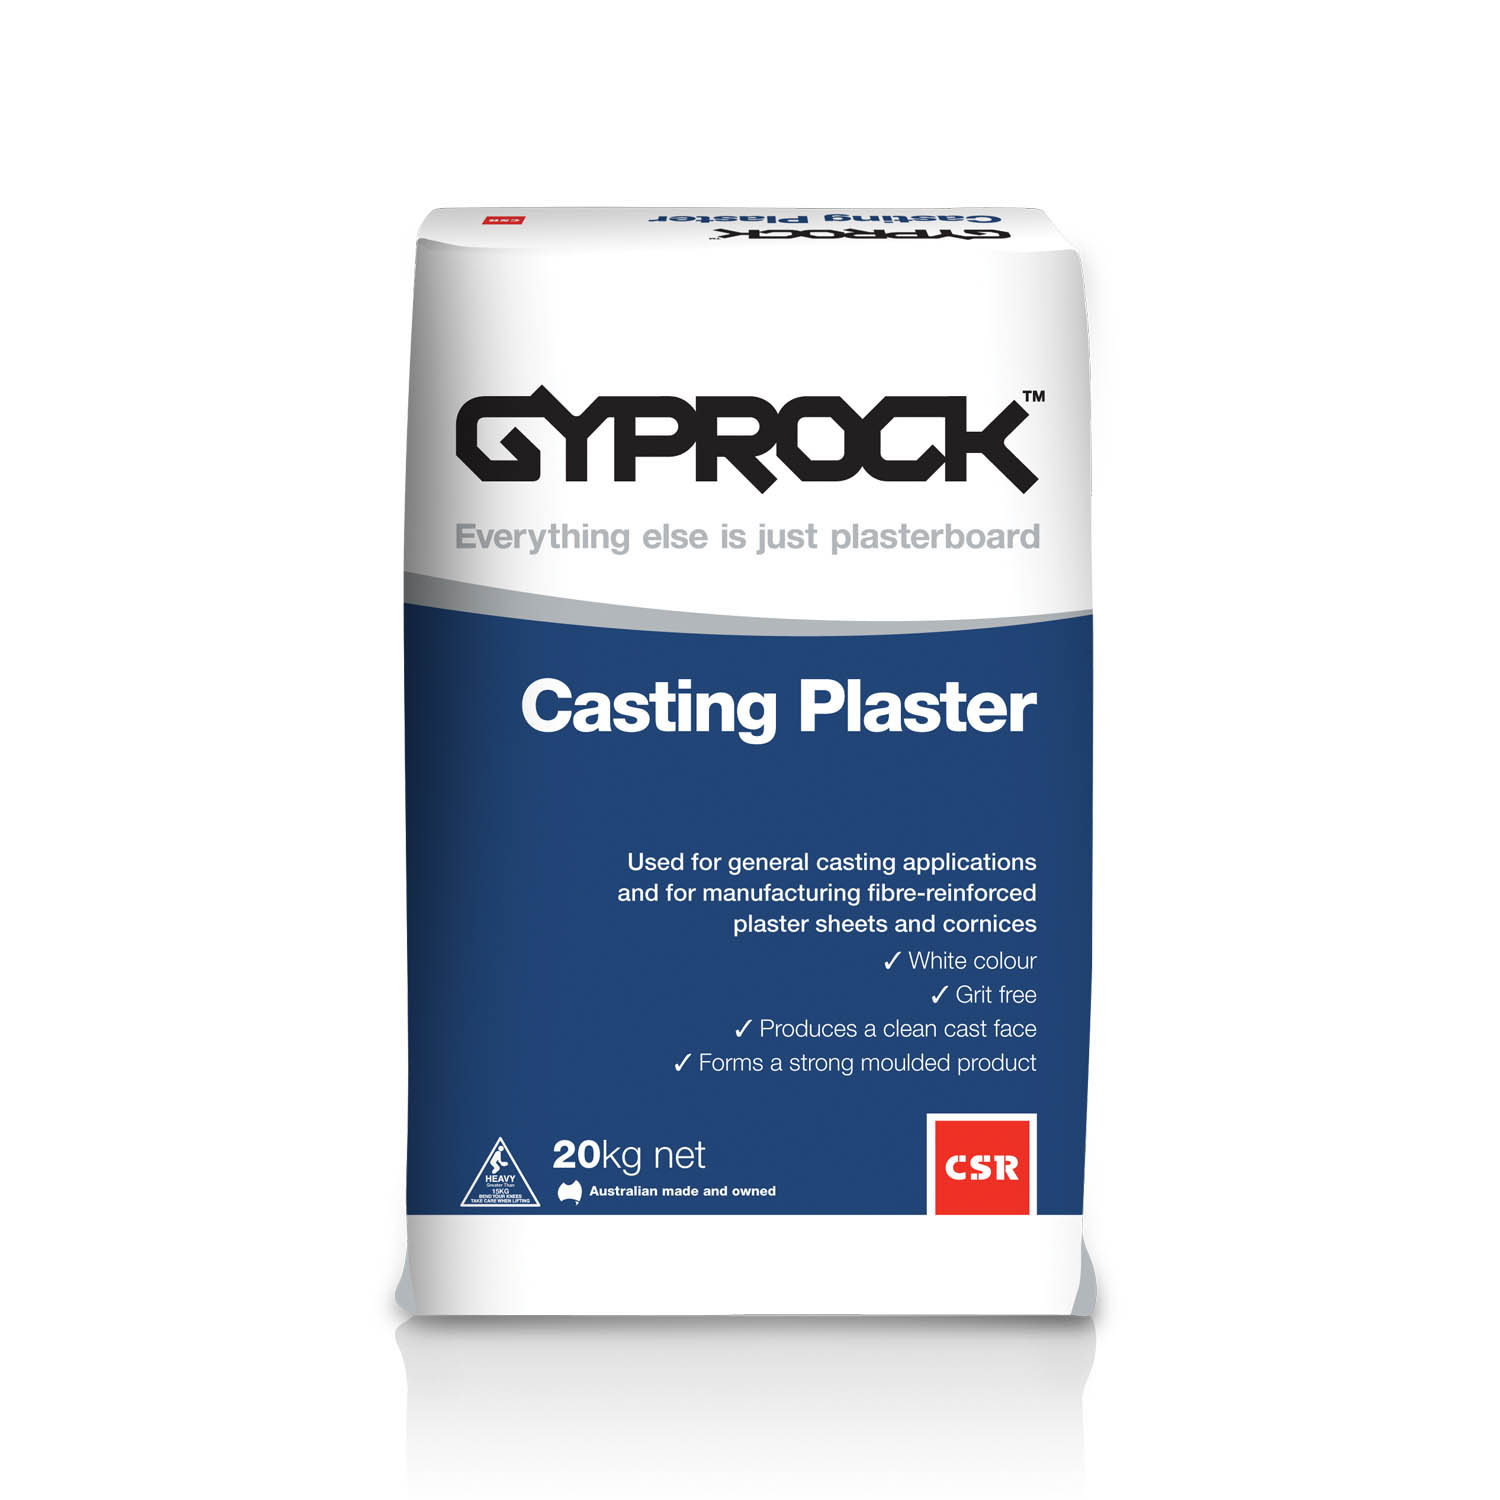 Gyprock® Casting Plaster